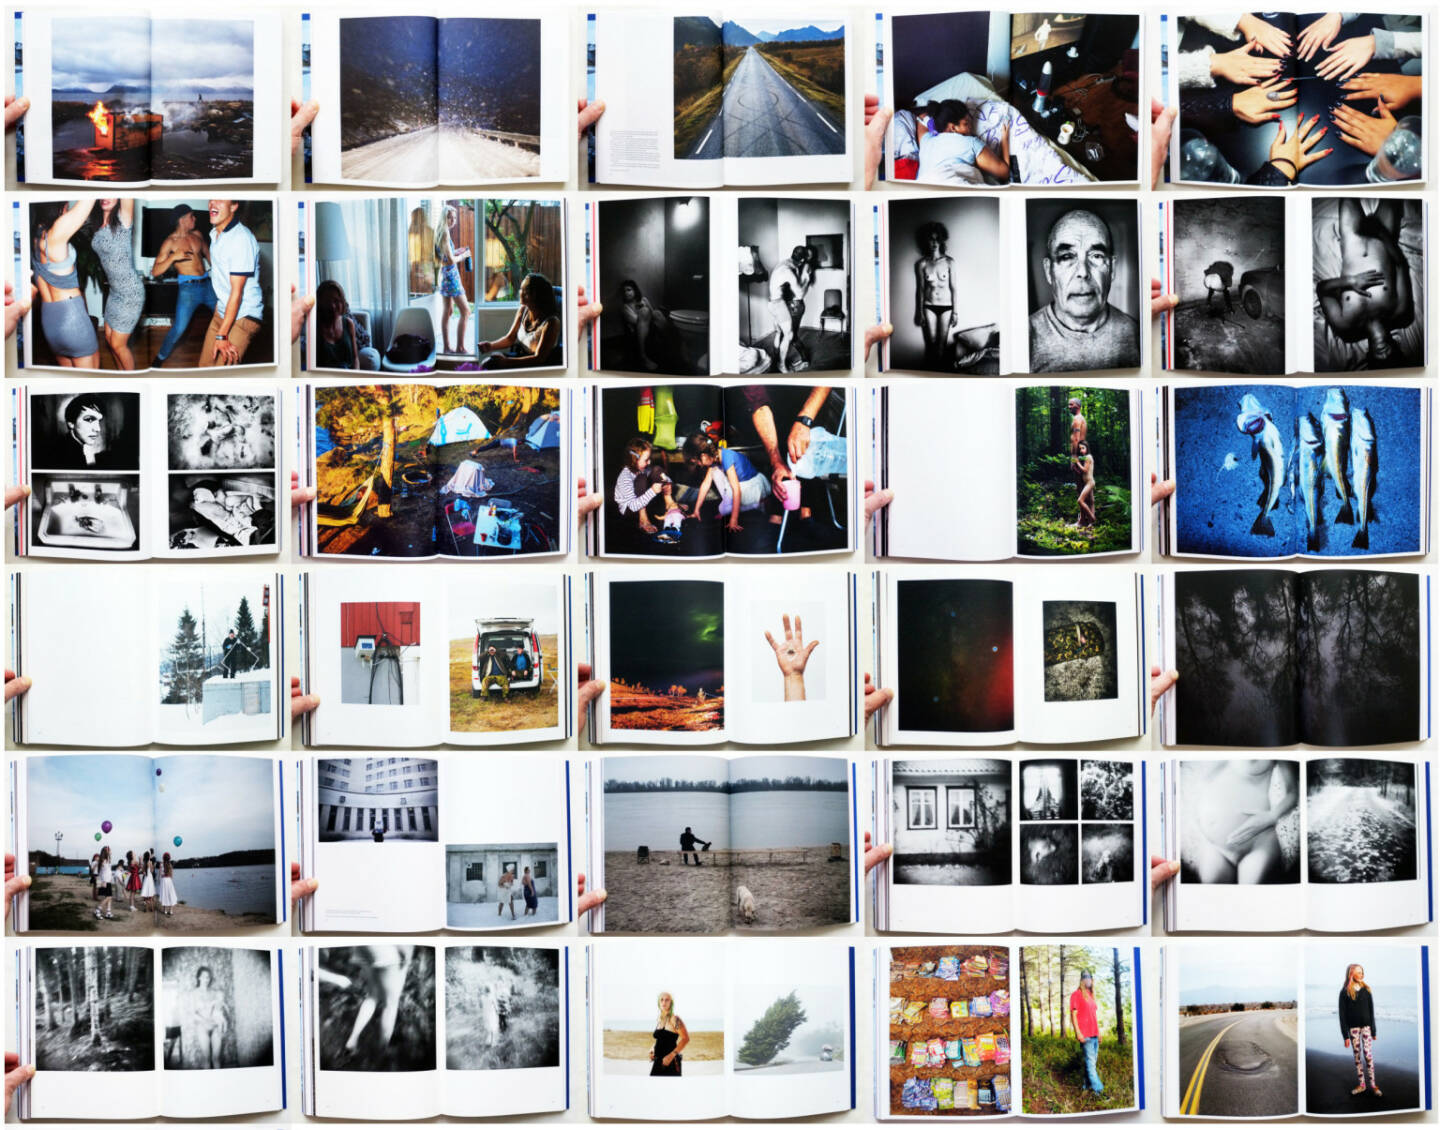 Various - Journal of Norwegian Photography #2, Journal 2015, Beispielseiten, sample spreads - http://josefchladek.com/book/various_-_journal_of_norwegian_photography_2